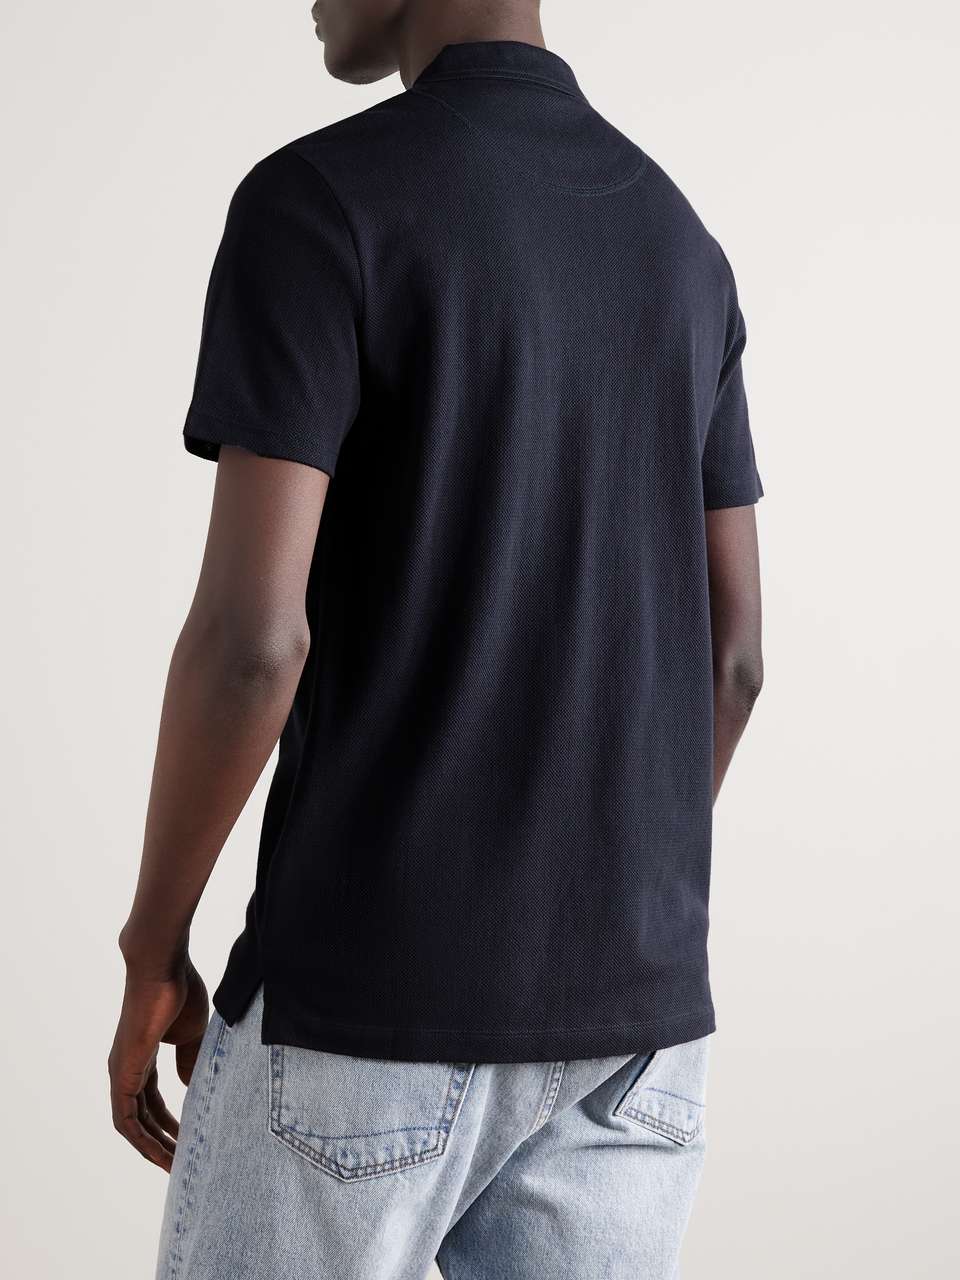 SUNSPEL Riviera Slim-Fit Cotton-Mesh Polo Shirt for Men | MR PORTER